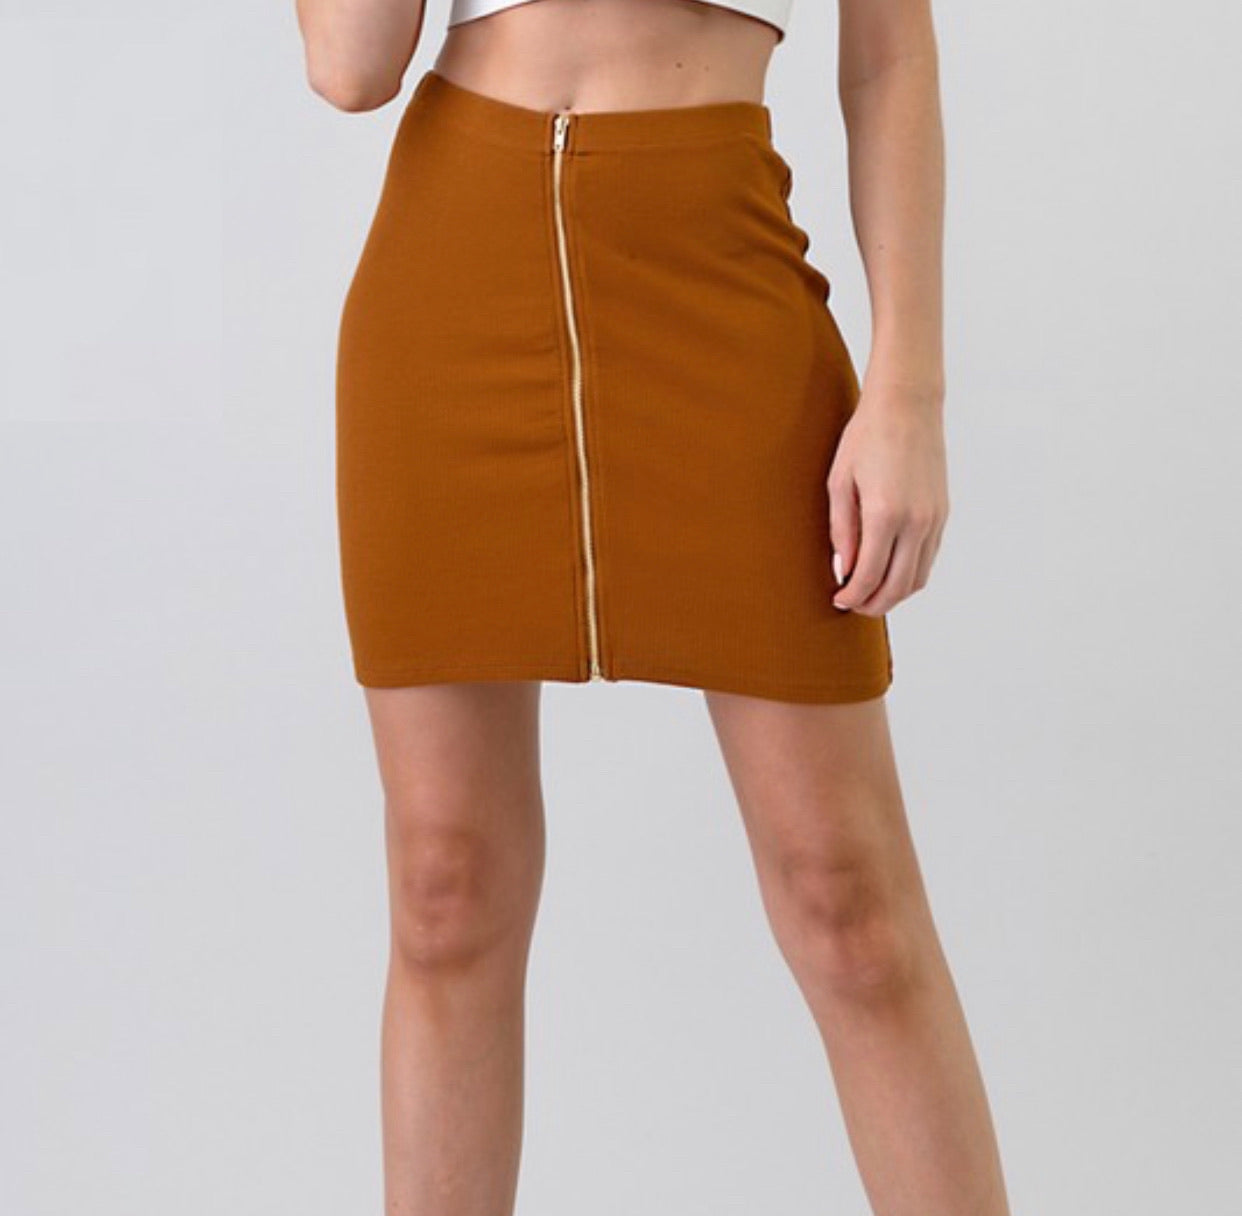 My Fave Skirt - Golden Brown